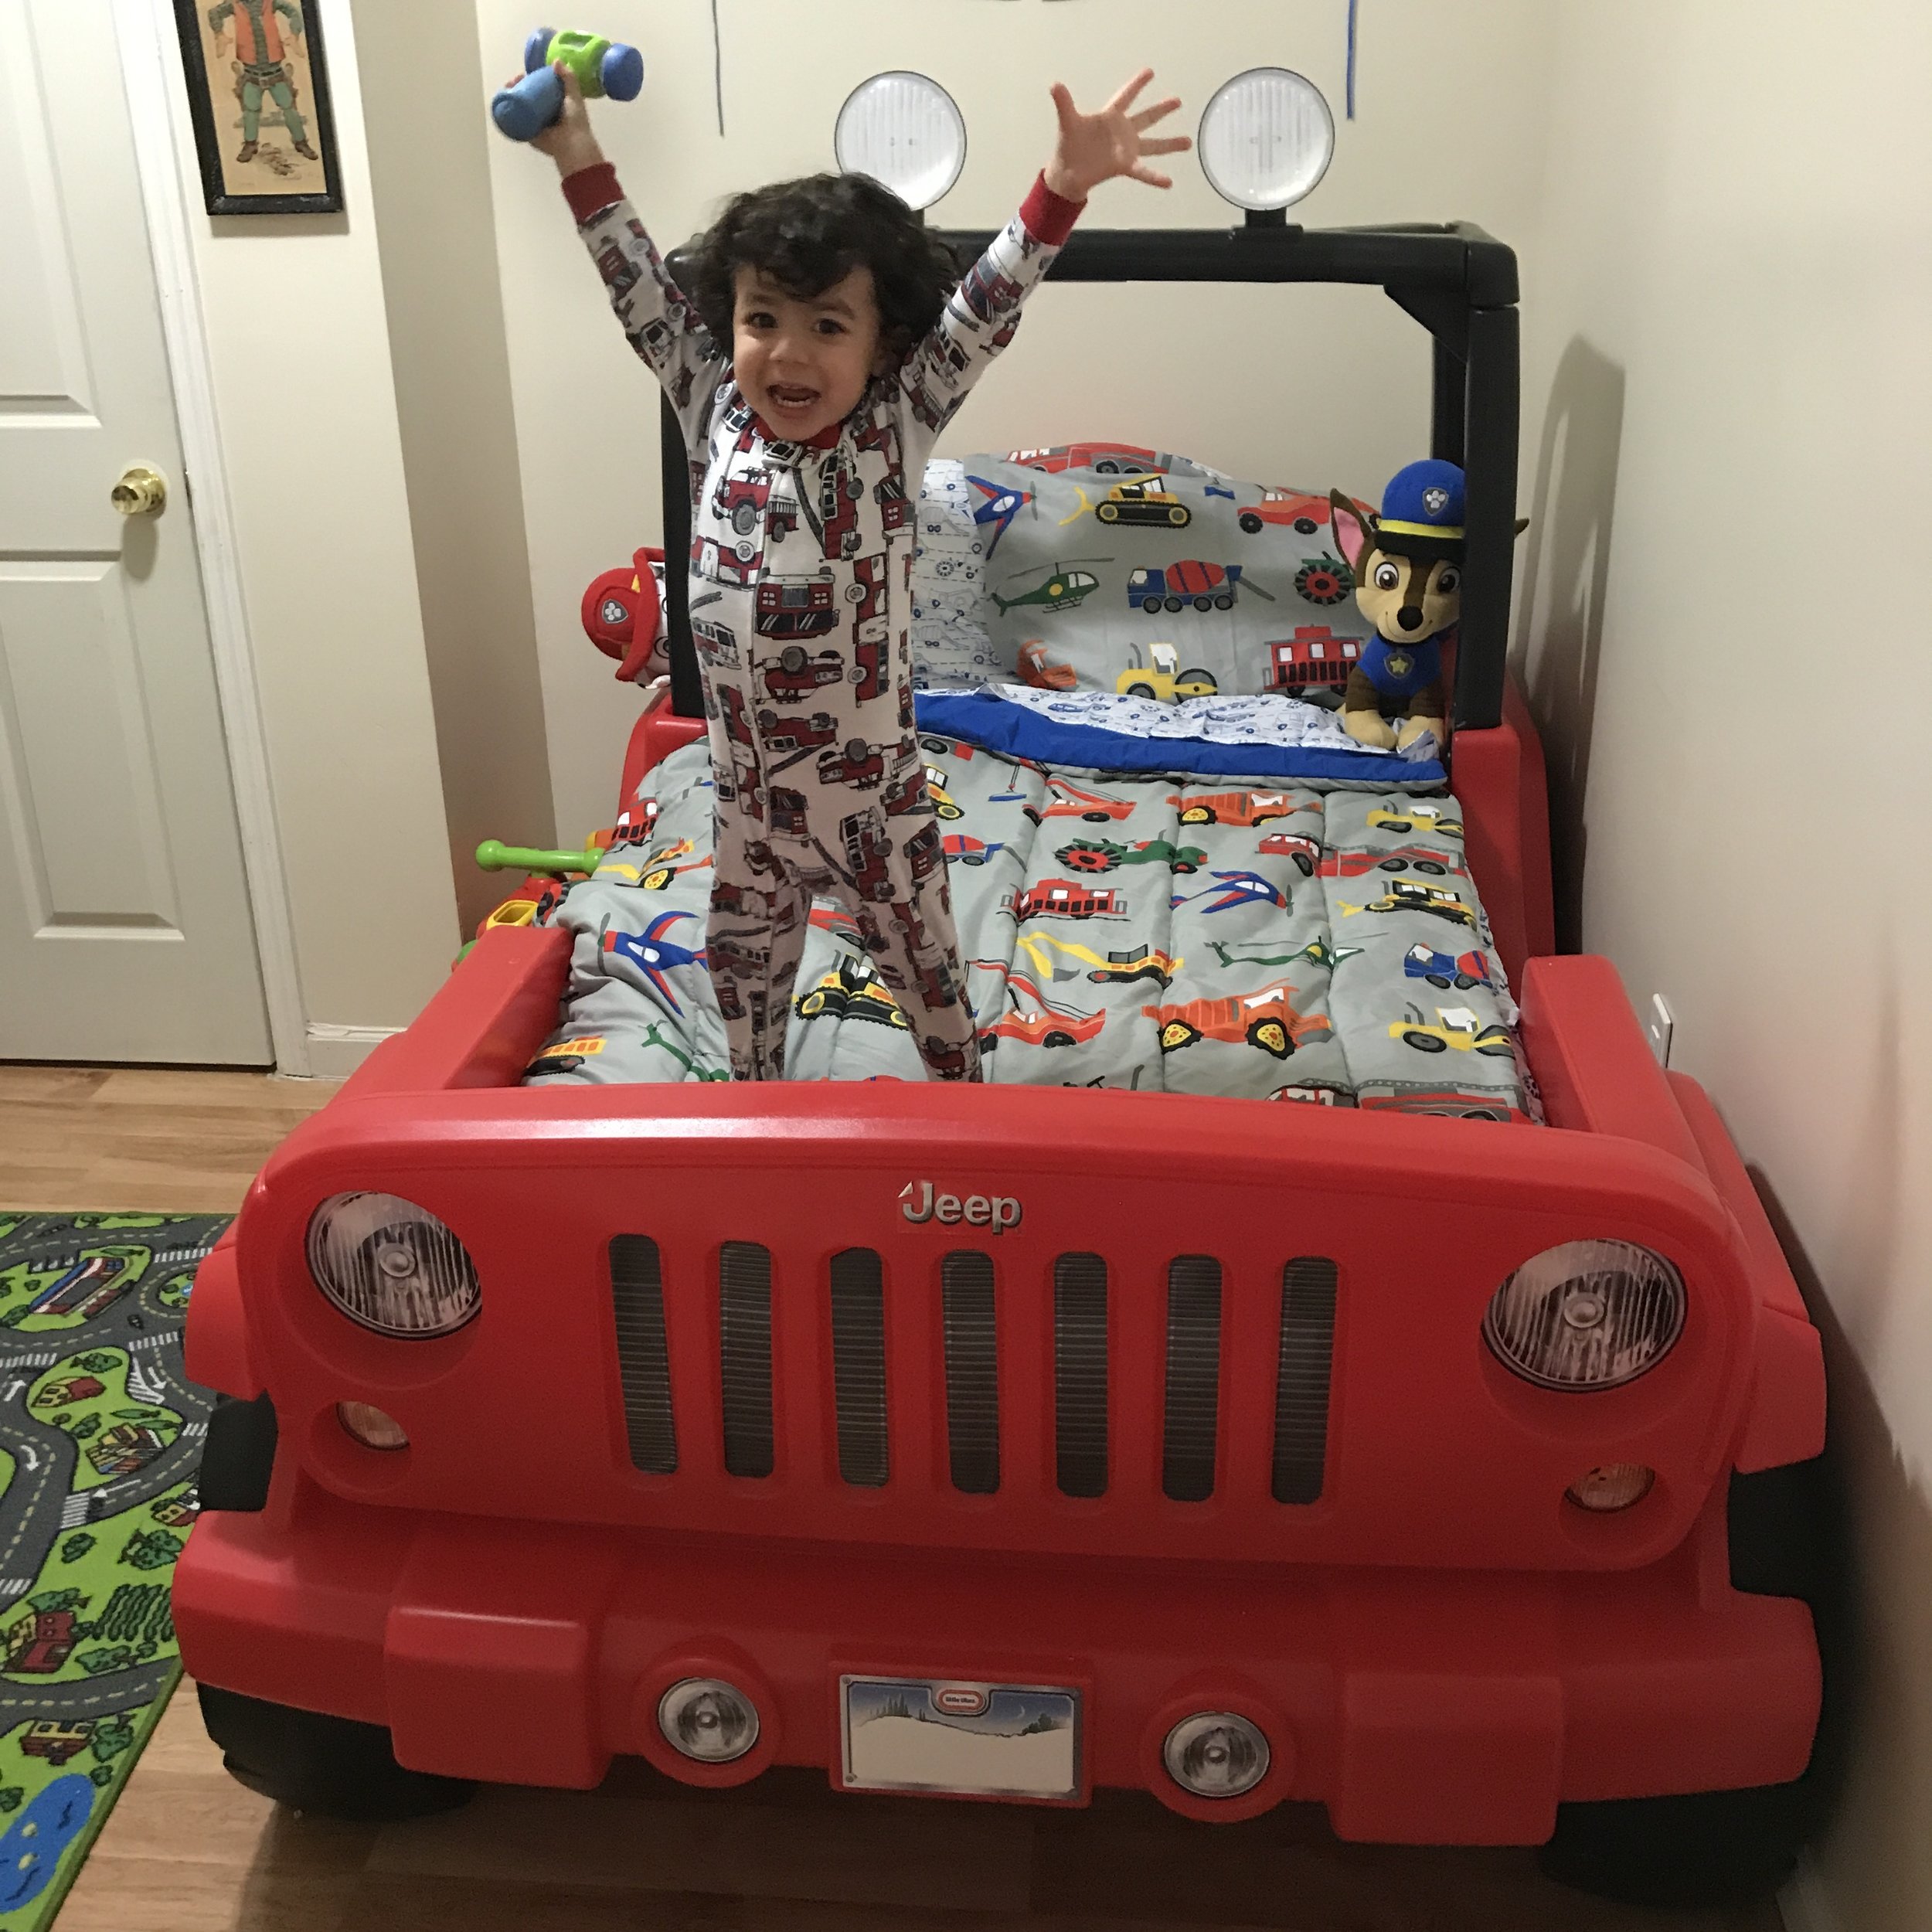 Jeep Toddler bedroom